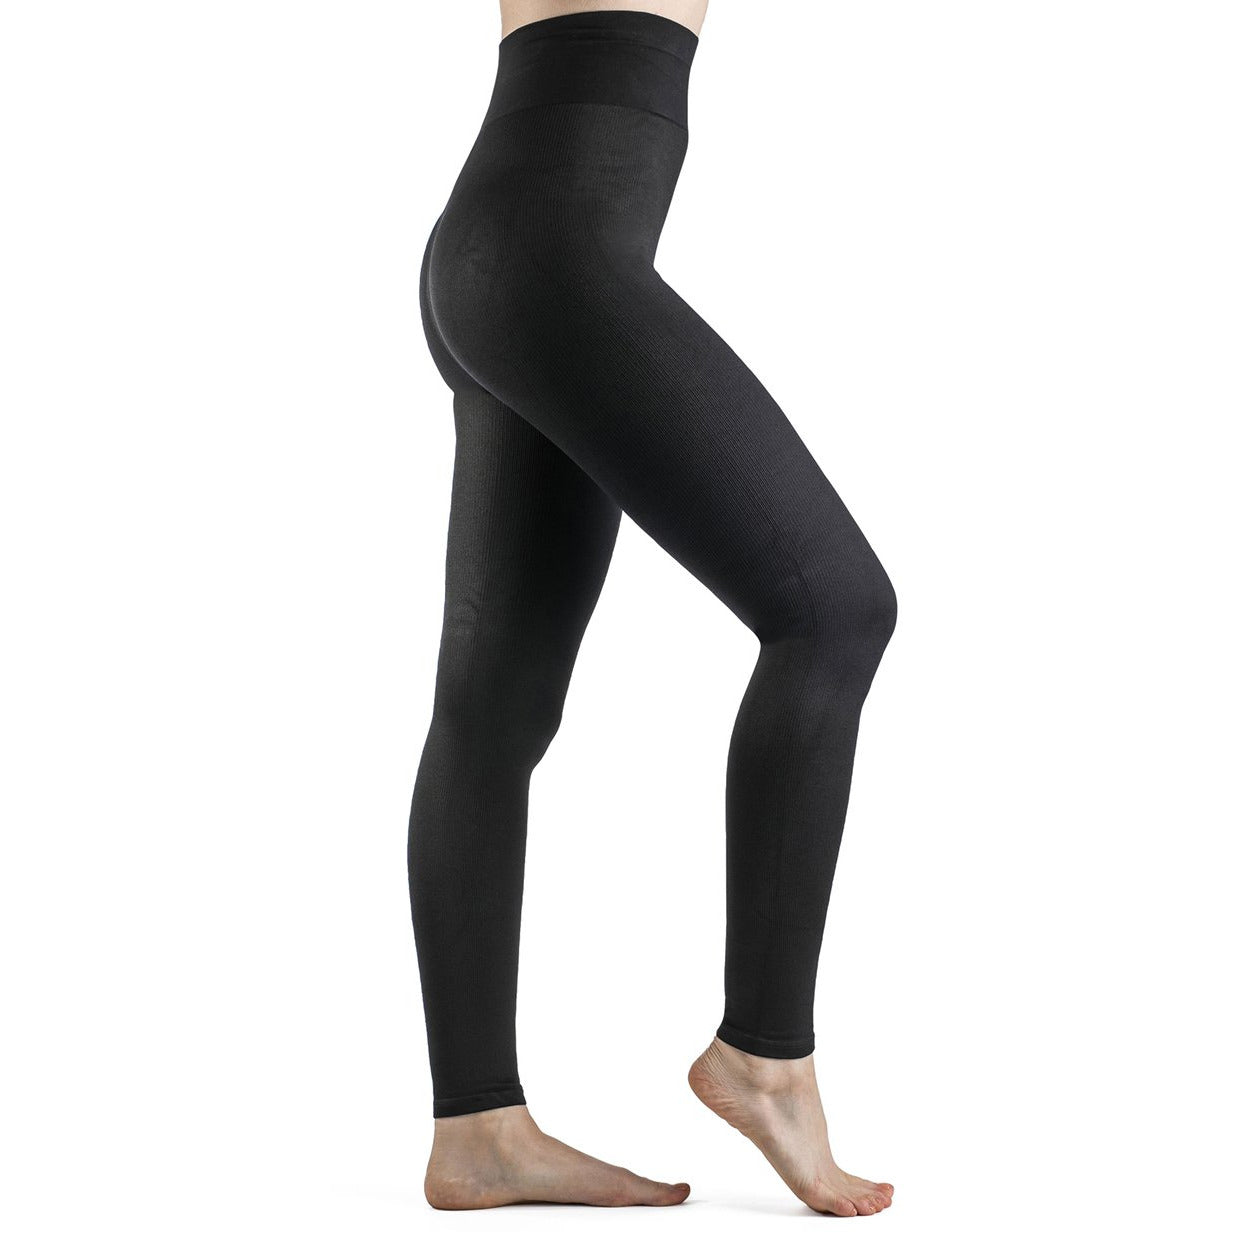 Sigvaris Soft Silhouette Women's Leggings 15-20 mmHg – Compression Store